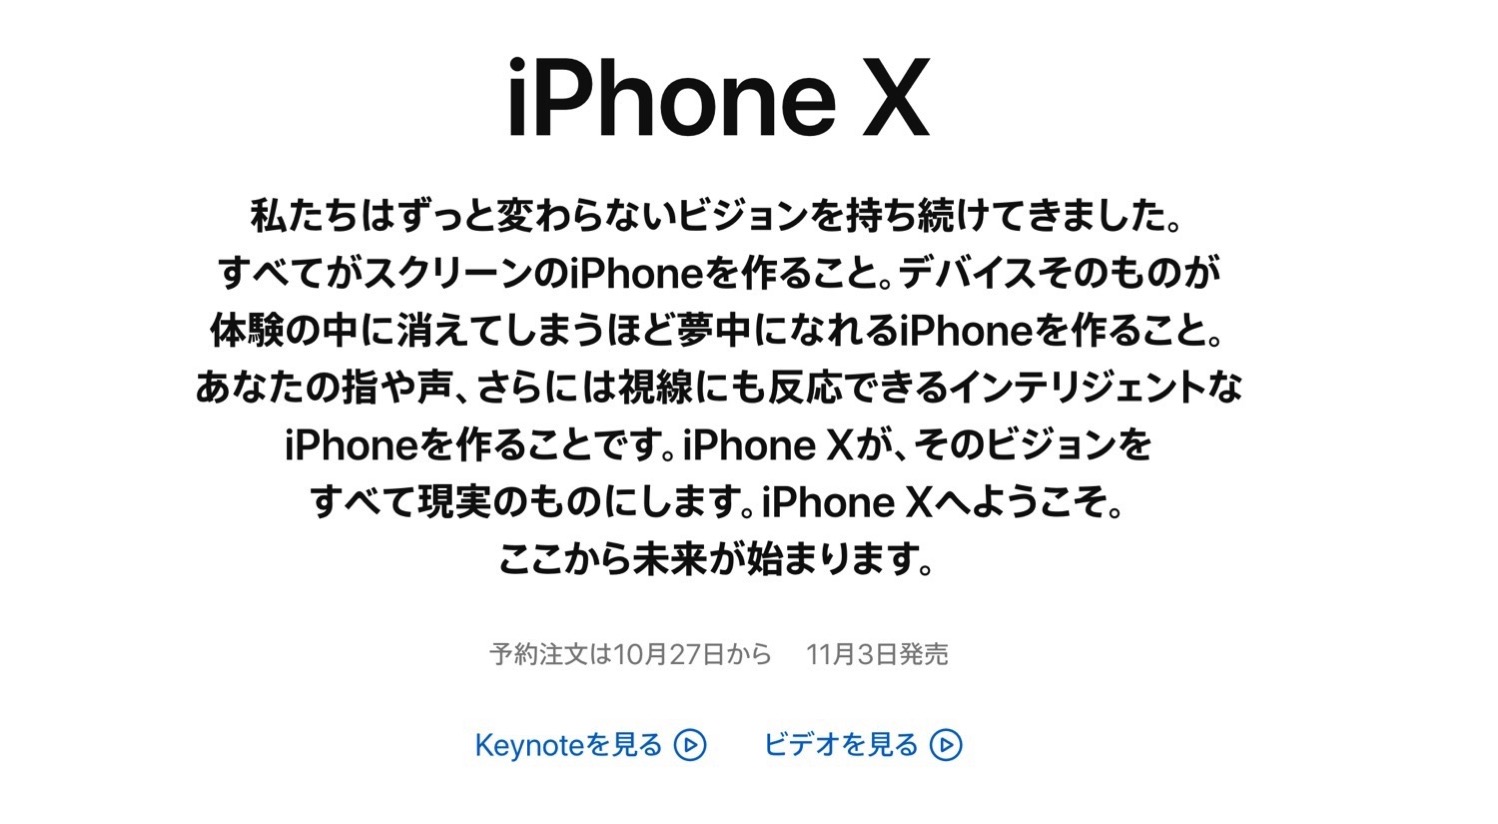 Iphone X spec price detail 2